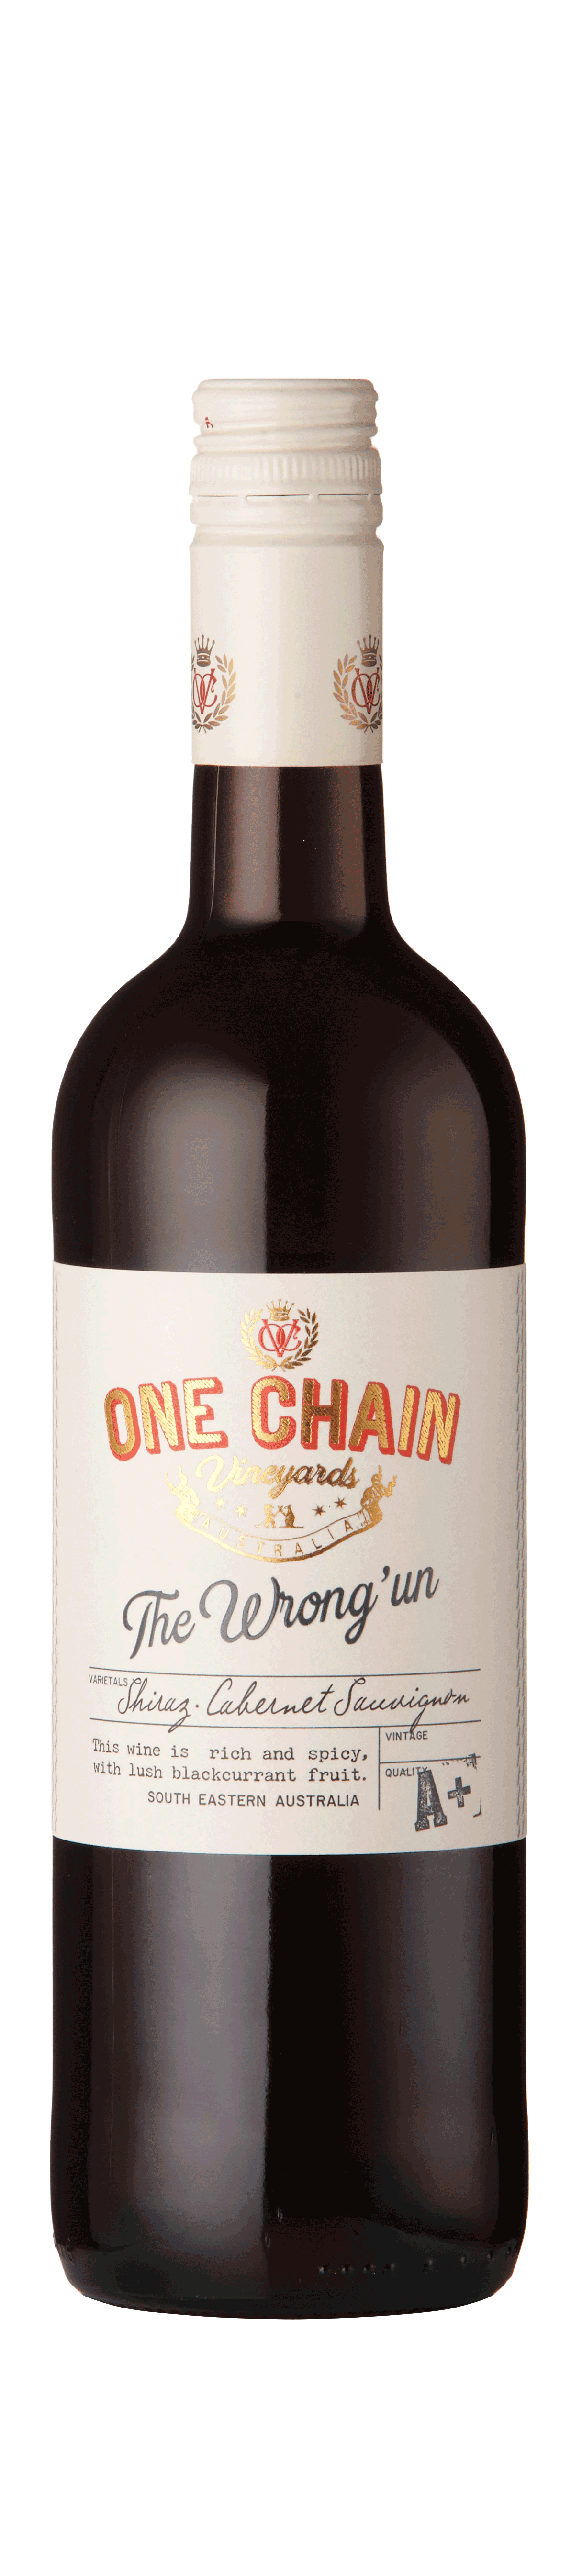 Bottle shot - One Chain Vineyards, The Wrong Un Shiraz, Cabernet, South Australia